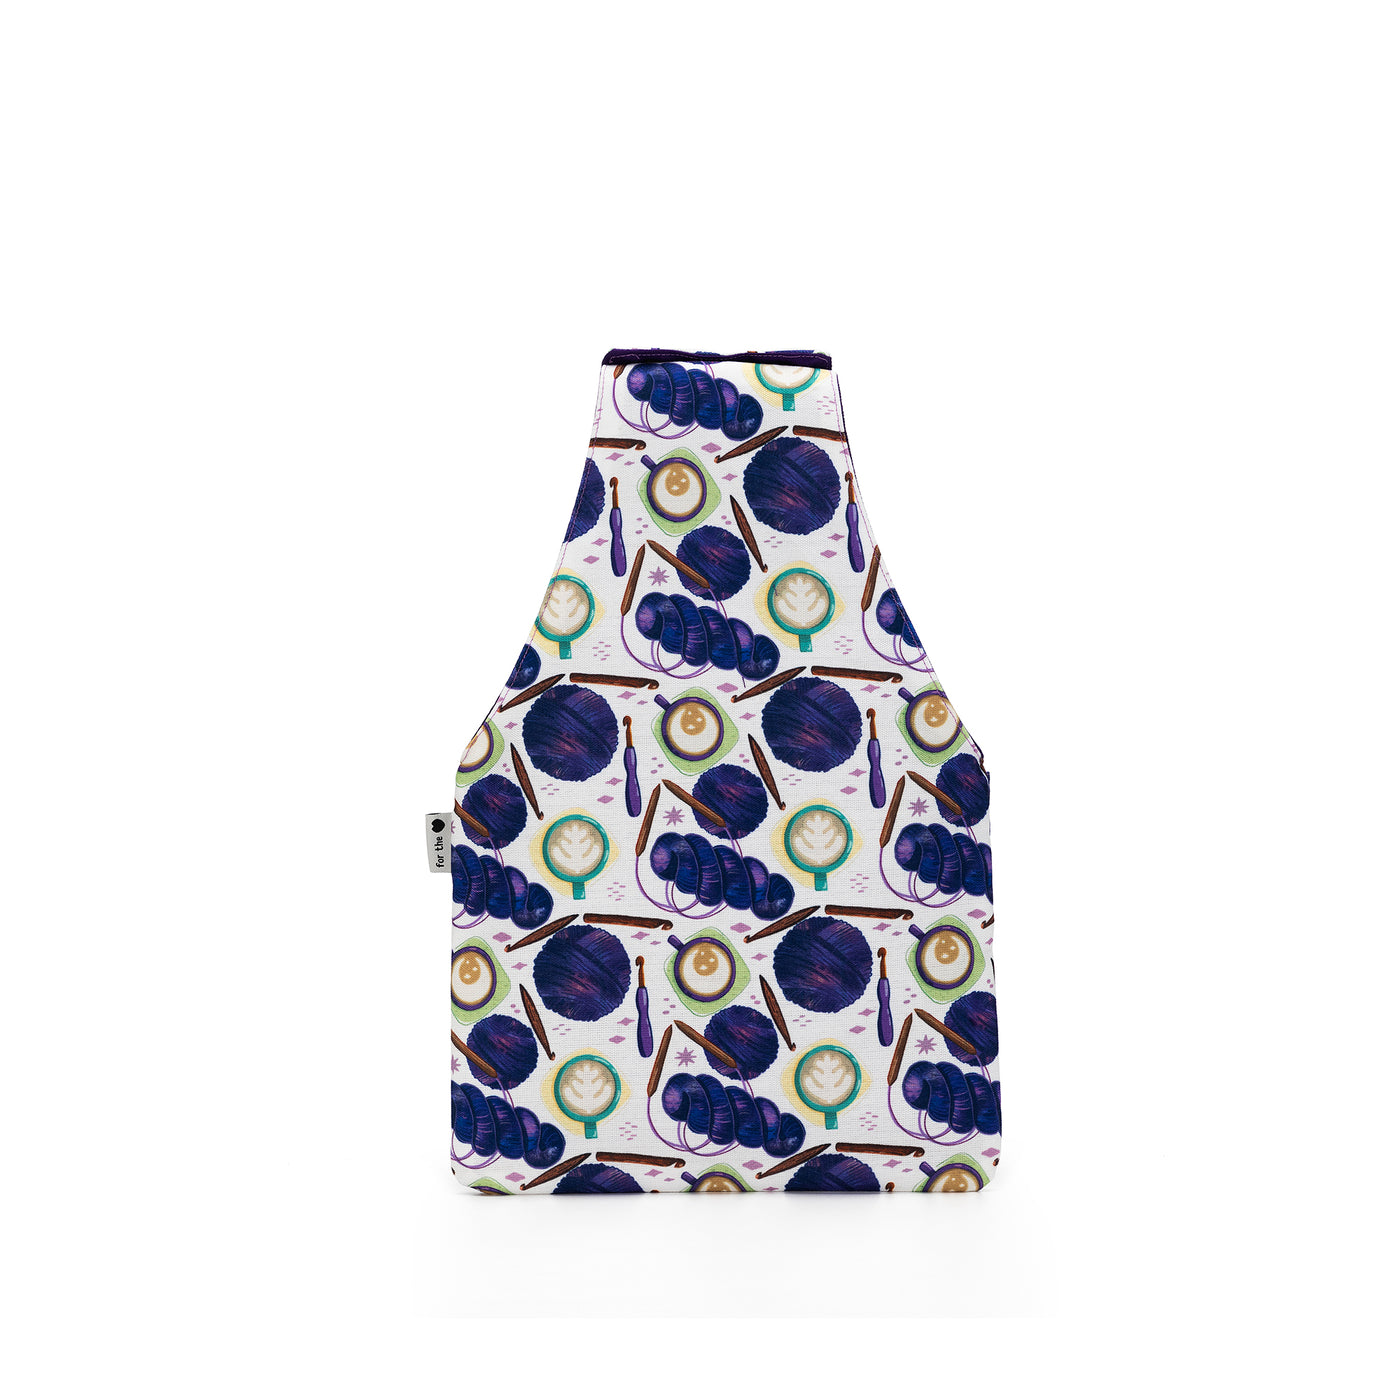 Nora Wrist Bag | Coffee and Yarn Green Fabric Print